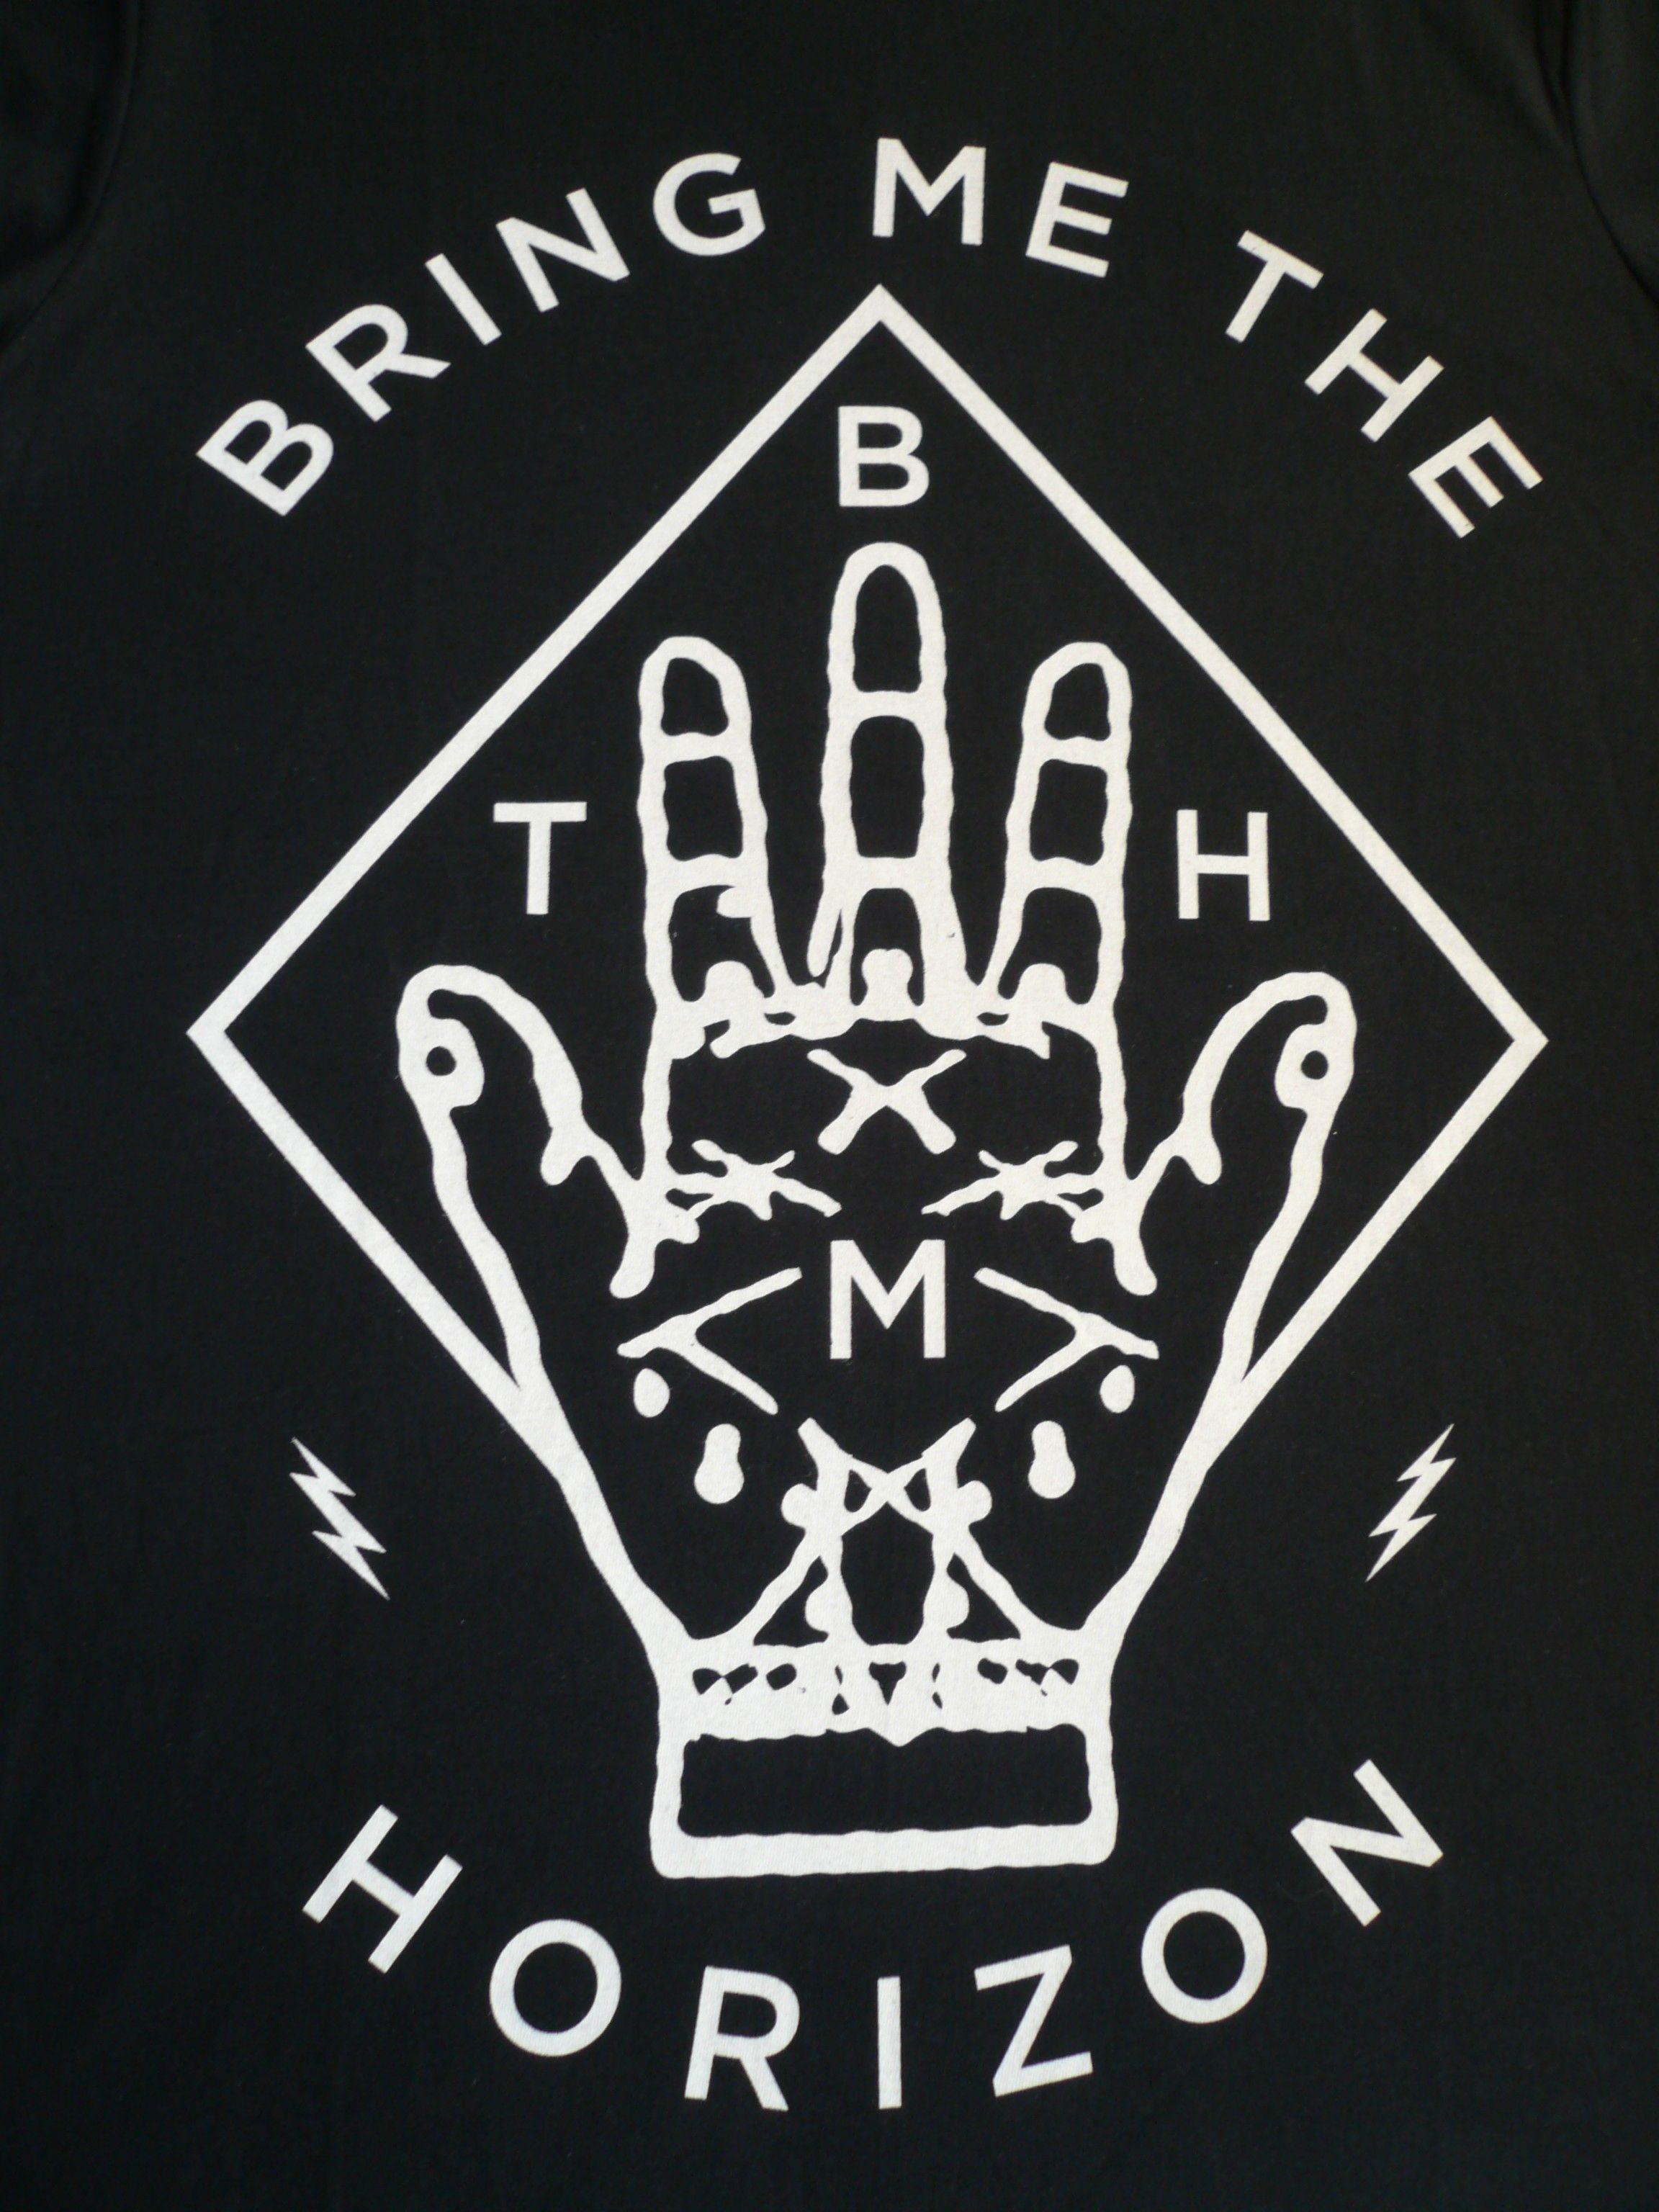 Bring Me the Horizon Logo - Bring Me The Horizon Diamond Hand T Shirt Amsterdam Waterlooplein